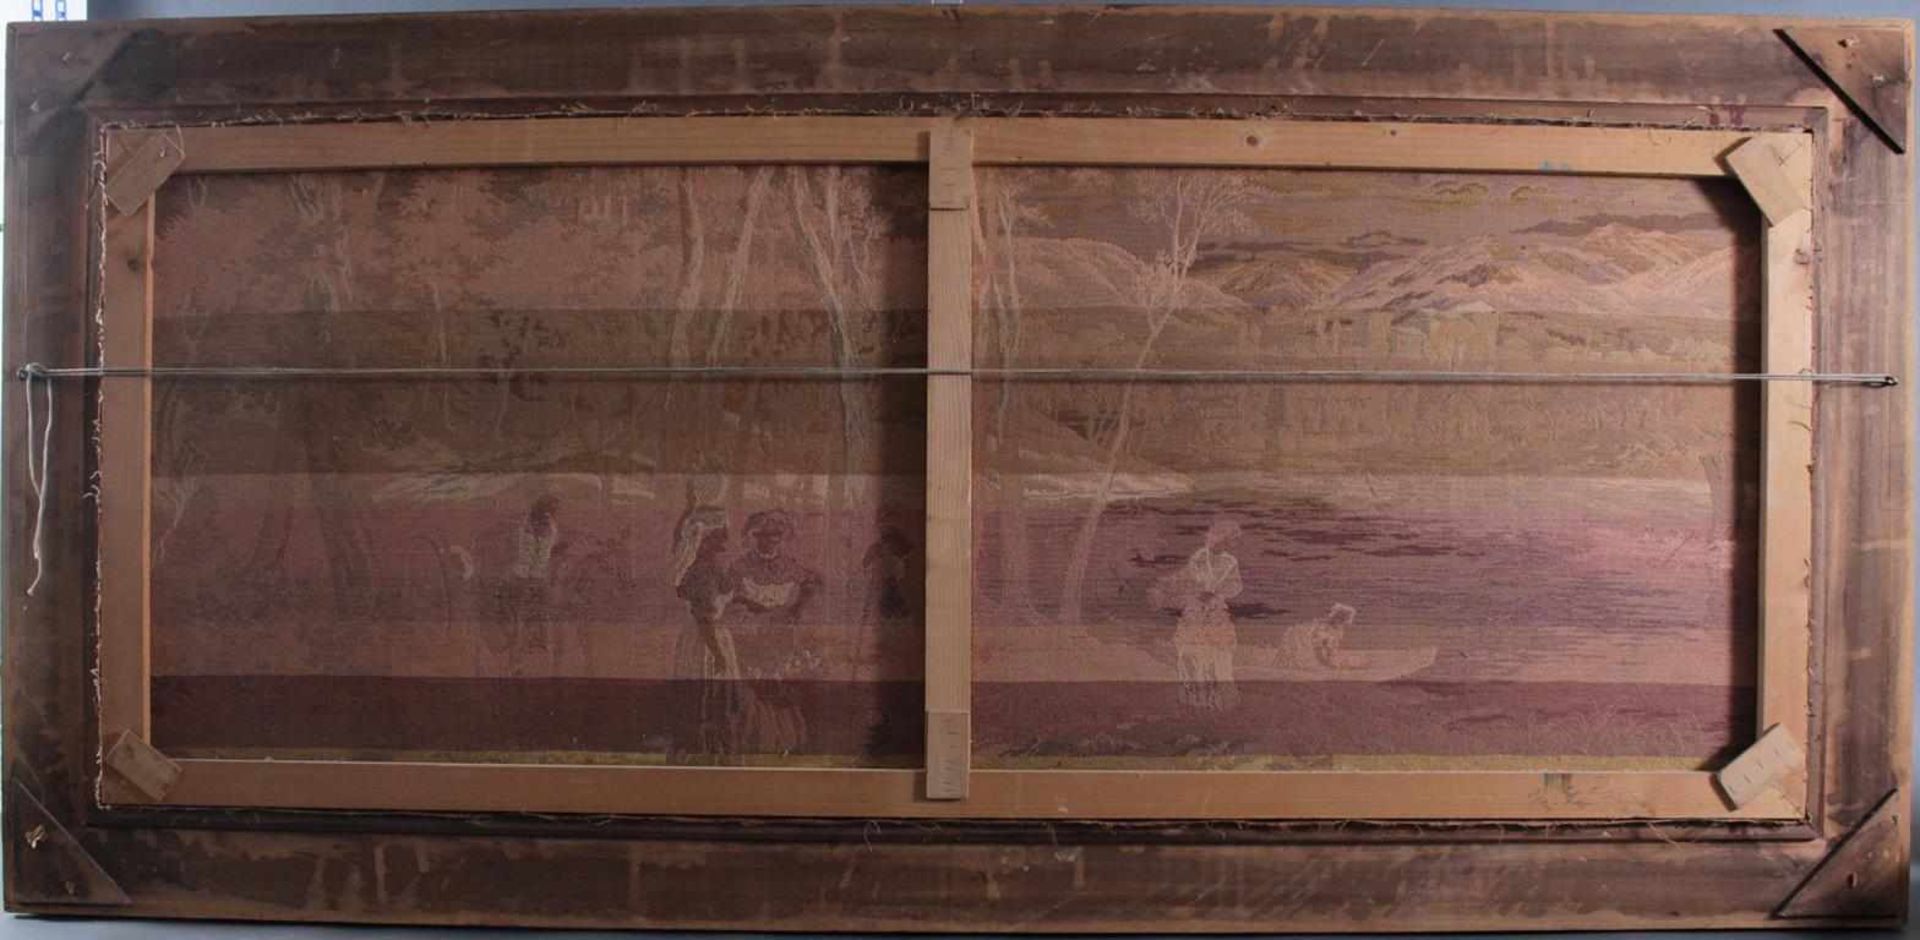 Großer Gobelin, mittelalterliche Szene, 2. Hälfte 20. Jh.Massiv geschnitzter Holzrahmen, ca. 70 × - Bild 3 aus 3